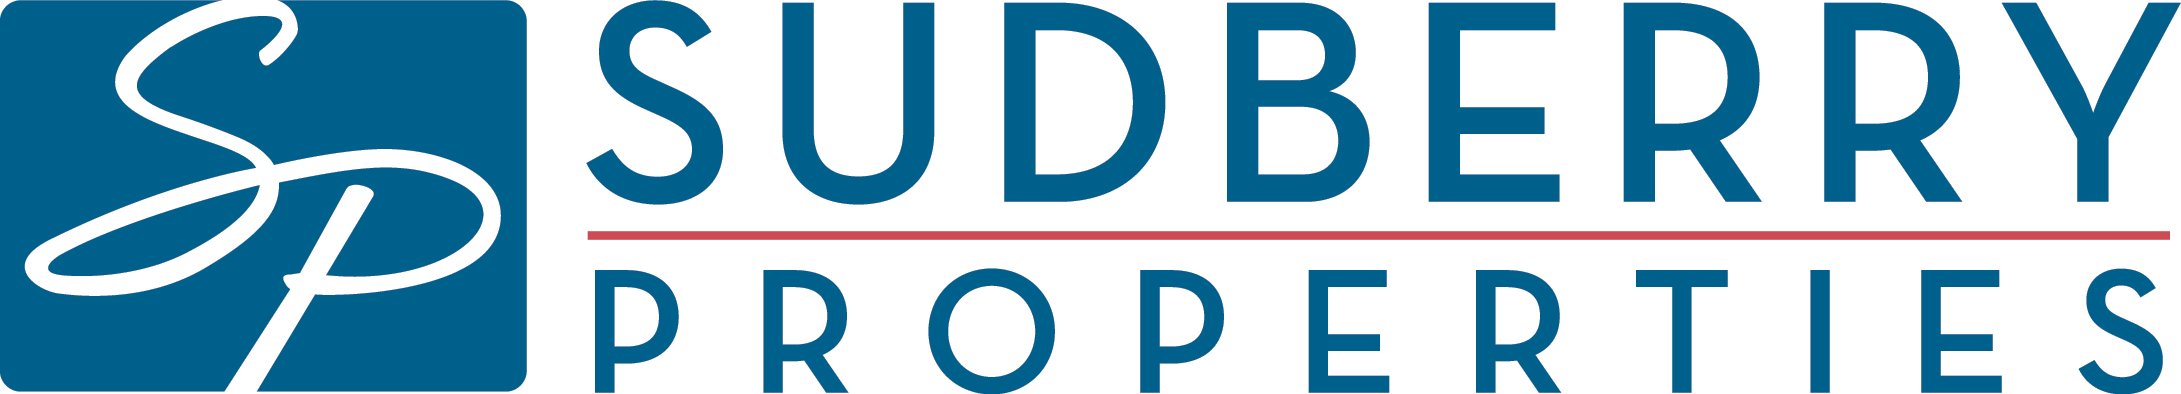 Sudberry Logo.jpeg